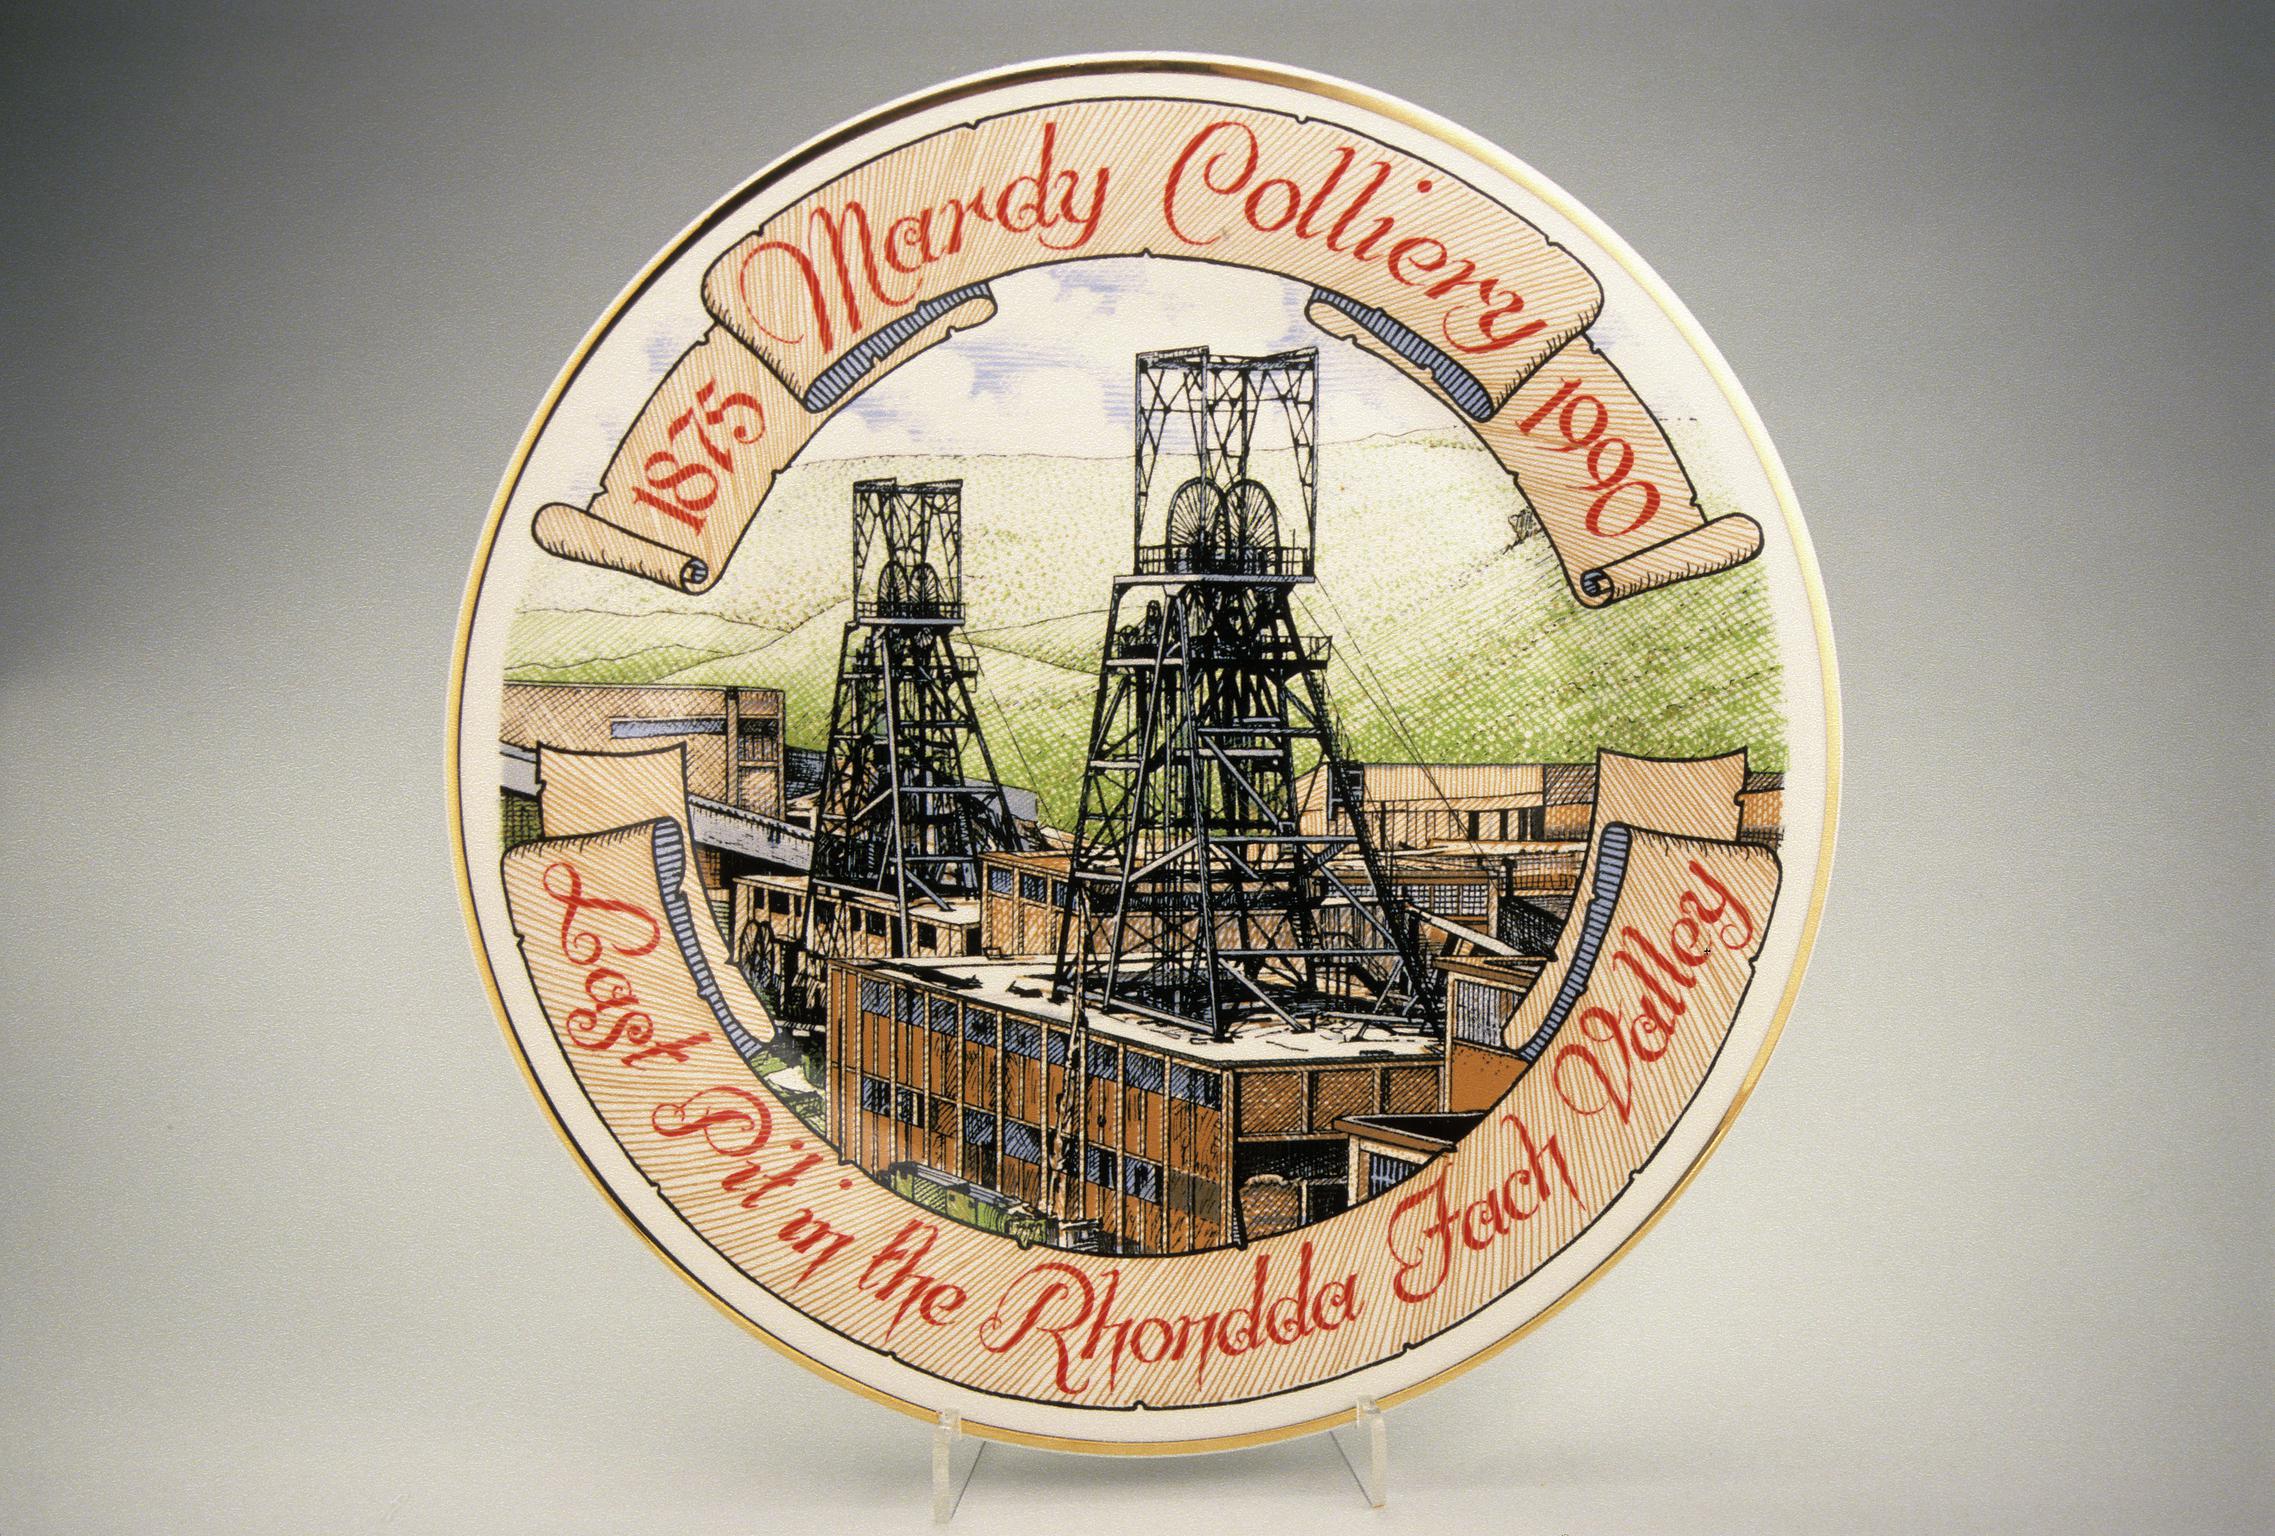 Mardy Colliery (plate)